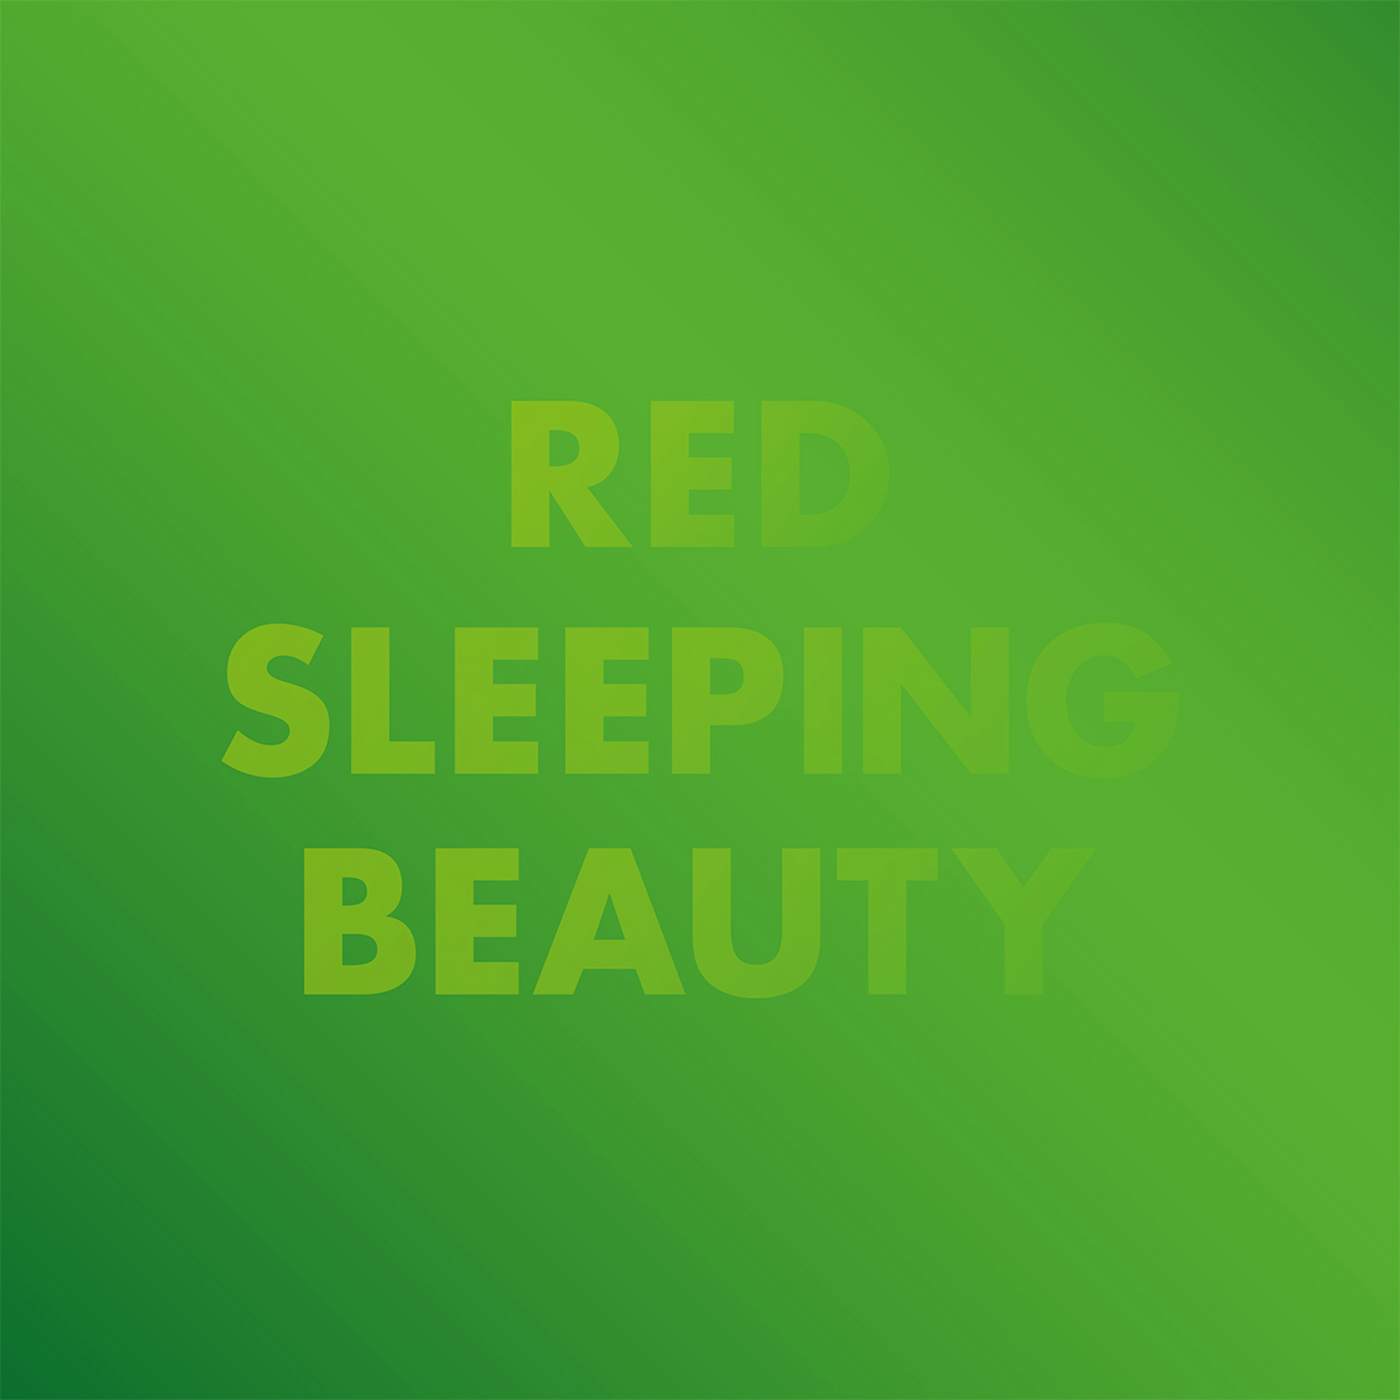 Red Sleeping Beauty Always Vinyl Record